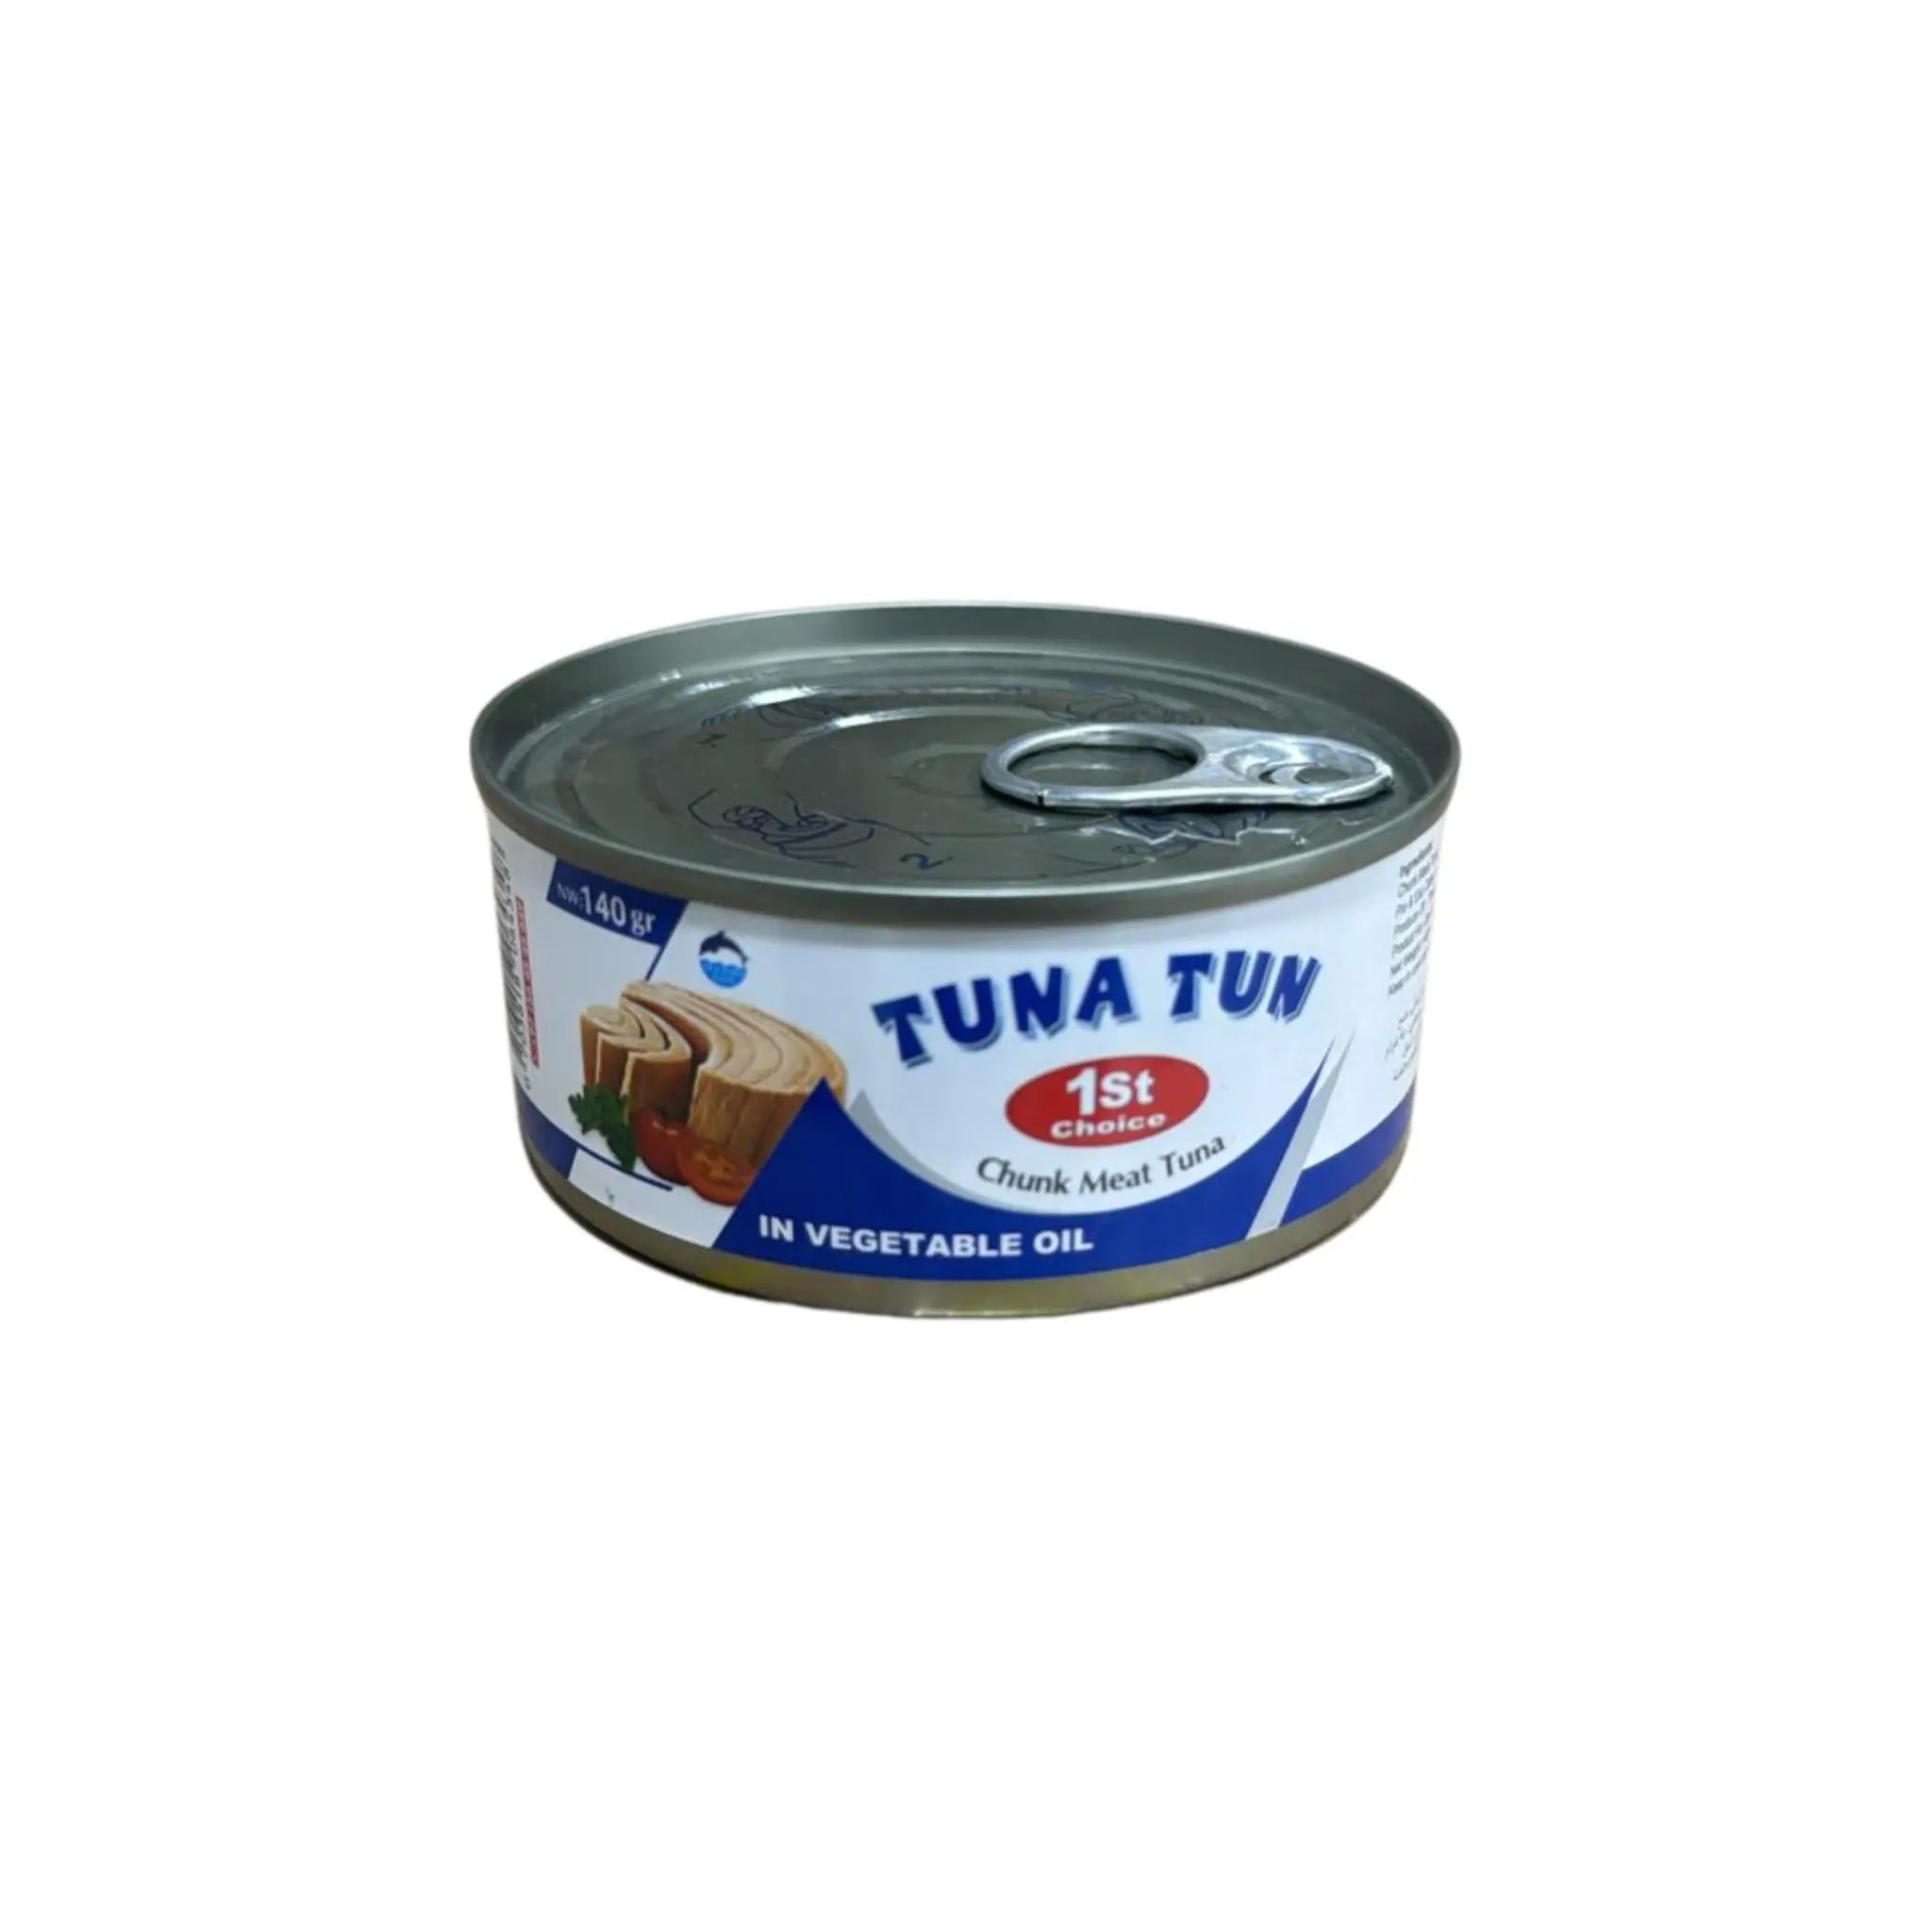 Tuna Tun chunk in Sunflower Oil - 48 x 140 GM (1 Carton) Marino.AE